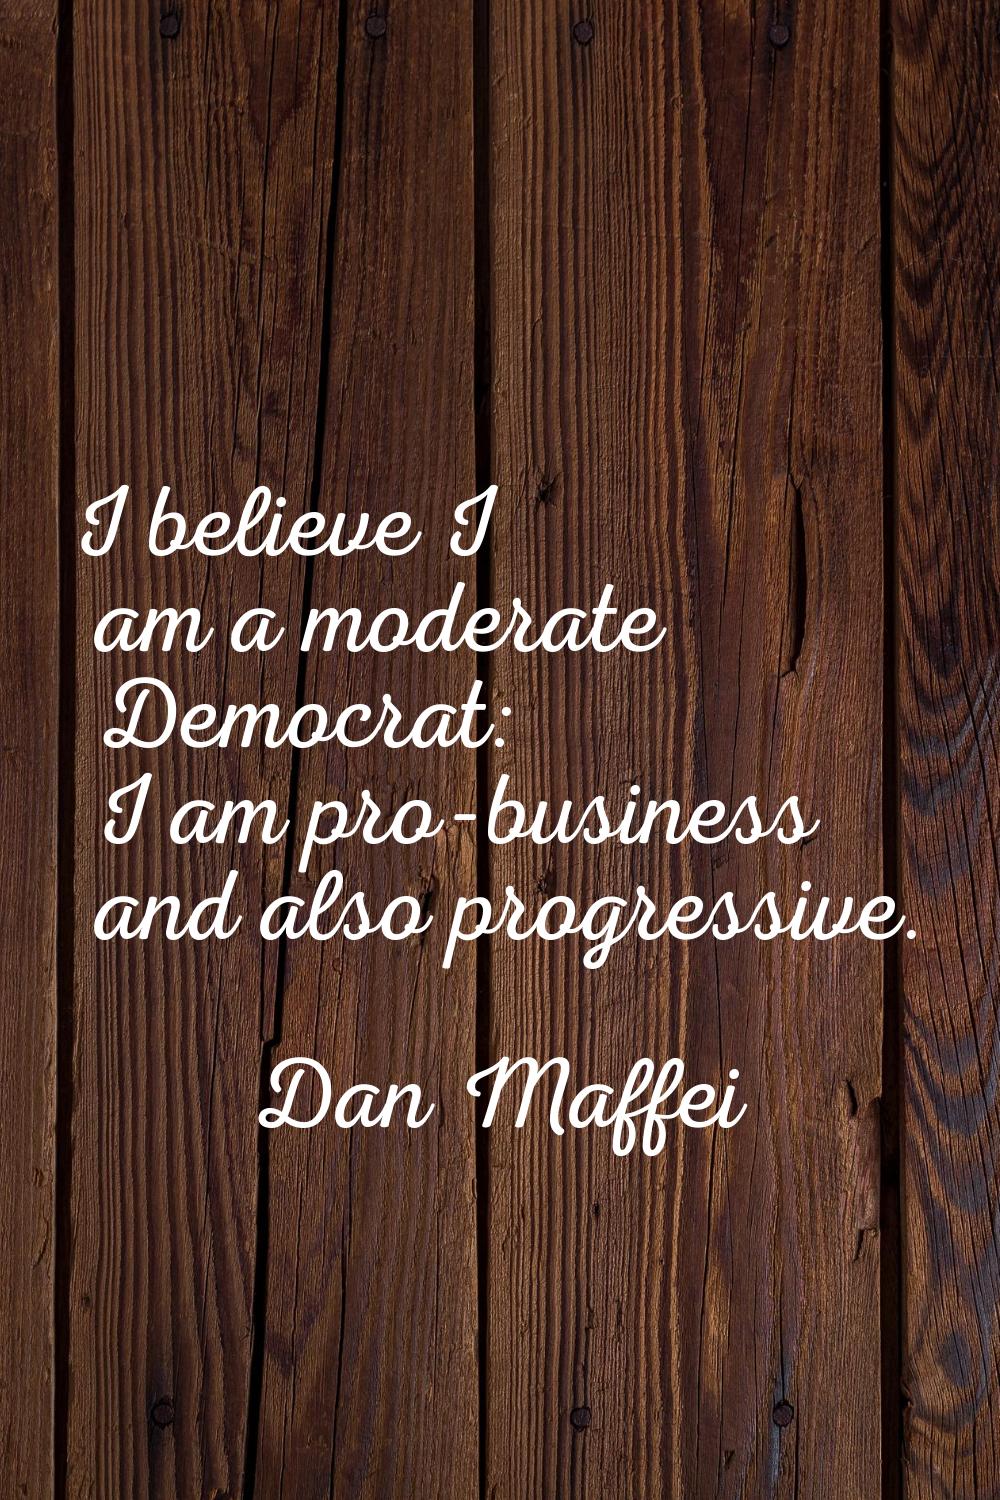 I believe I am a moderate Democrat: I am pro-business and also progressive.